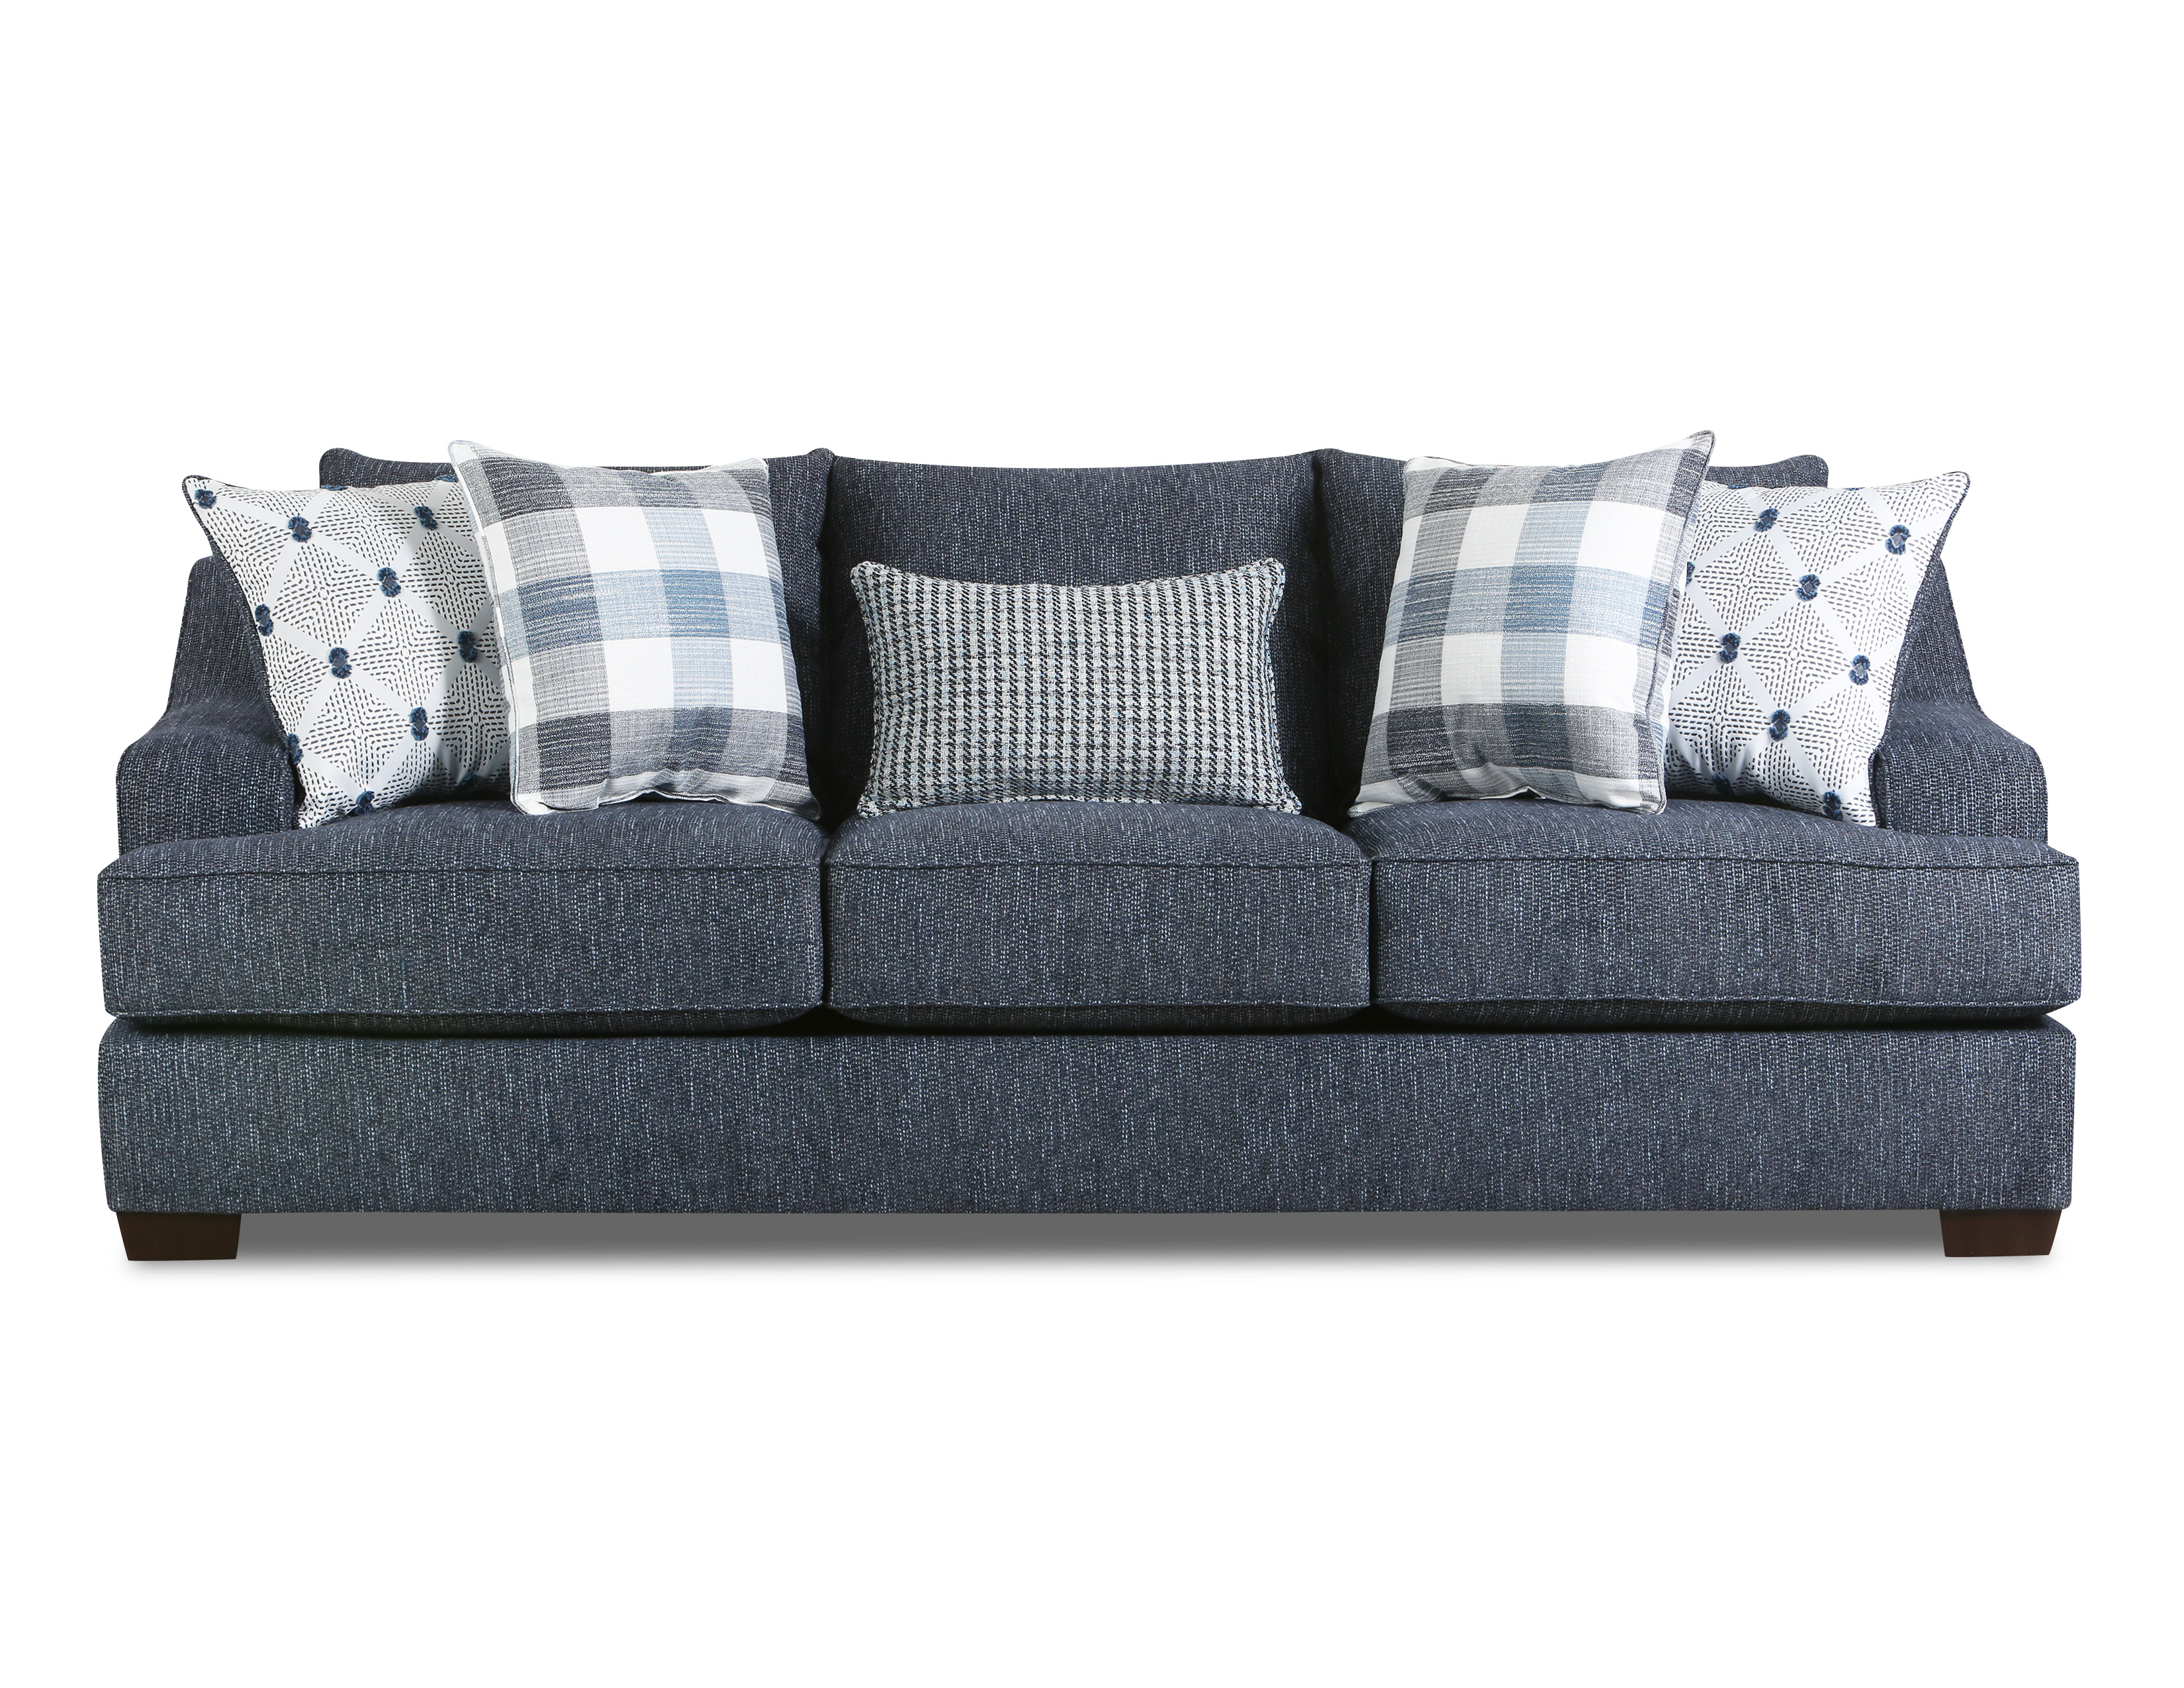 Indigo Sofa with Pocketed Coil Cushions-8084-03 BELHAVEN INDIGO